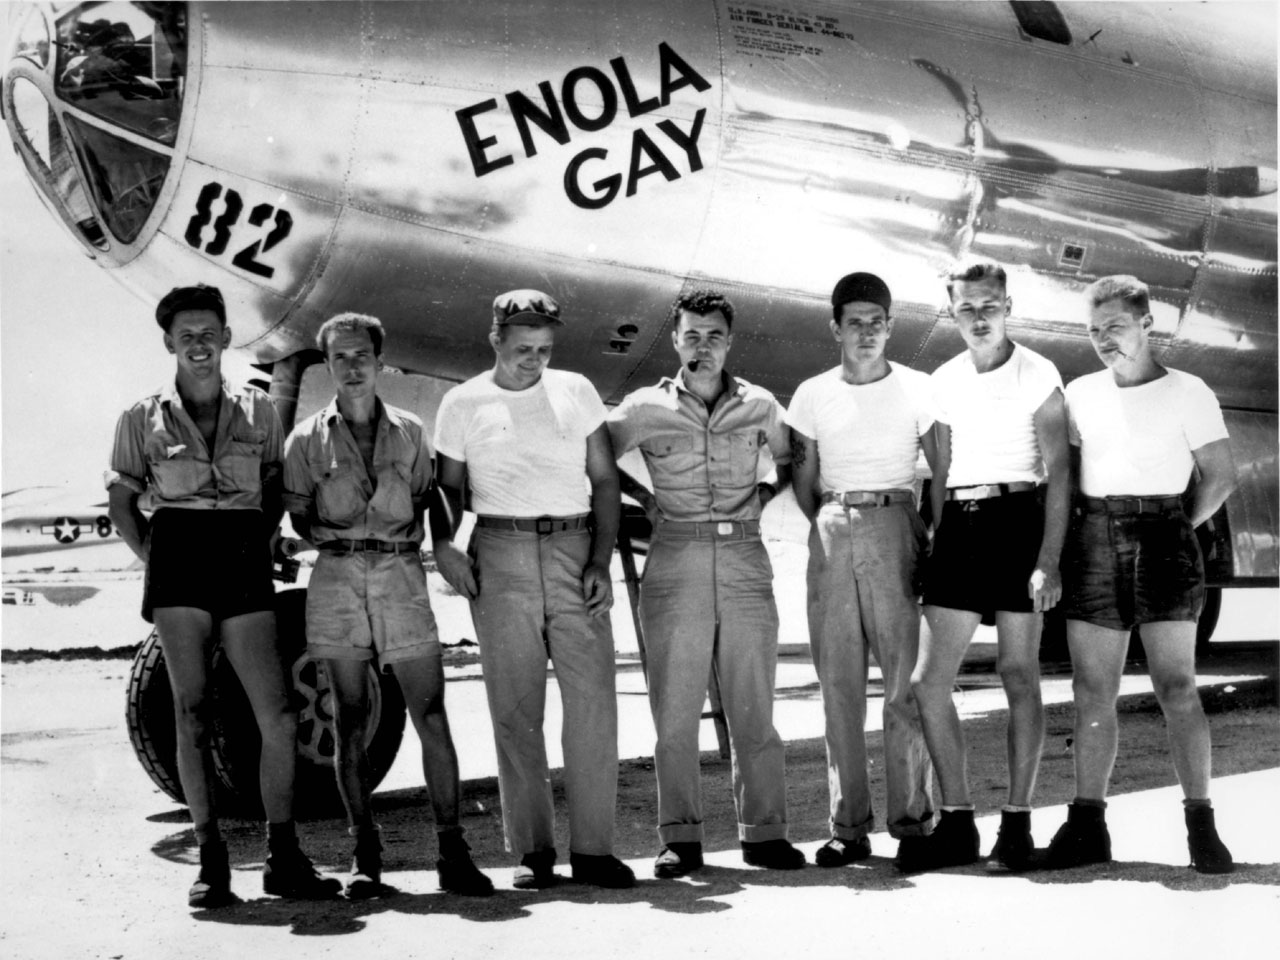 MARIANAS: CREWS

The ground crew of the B-29 